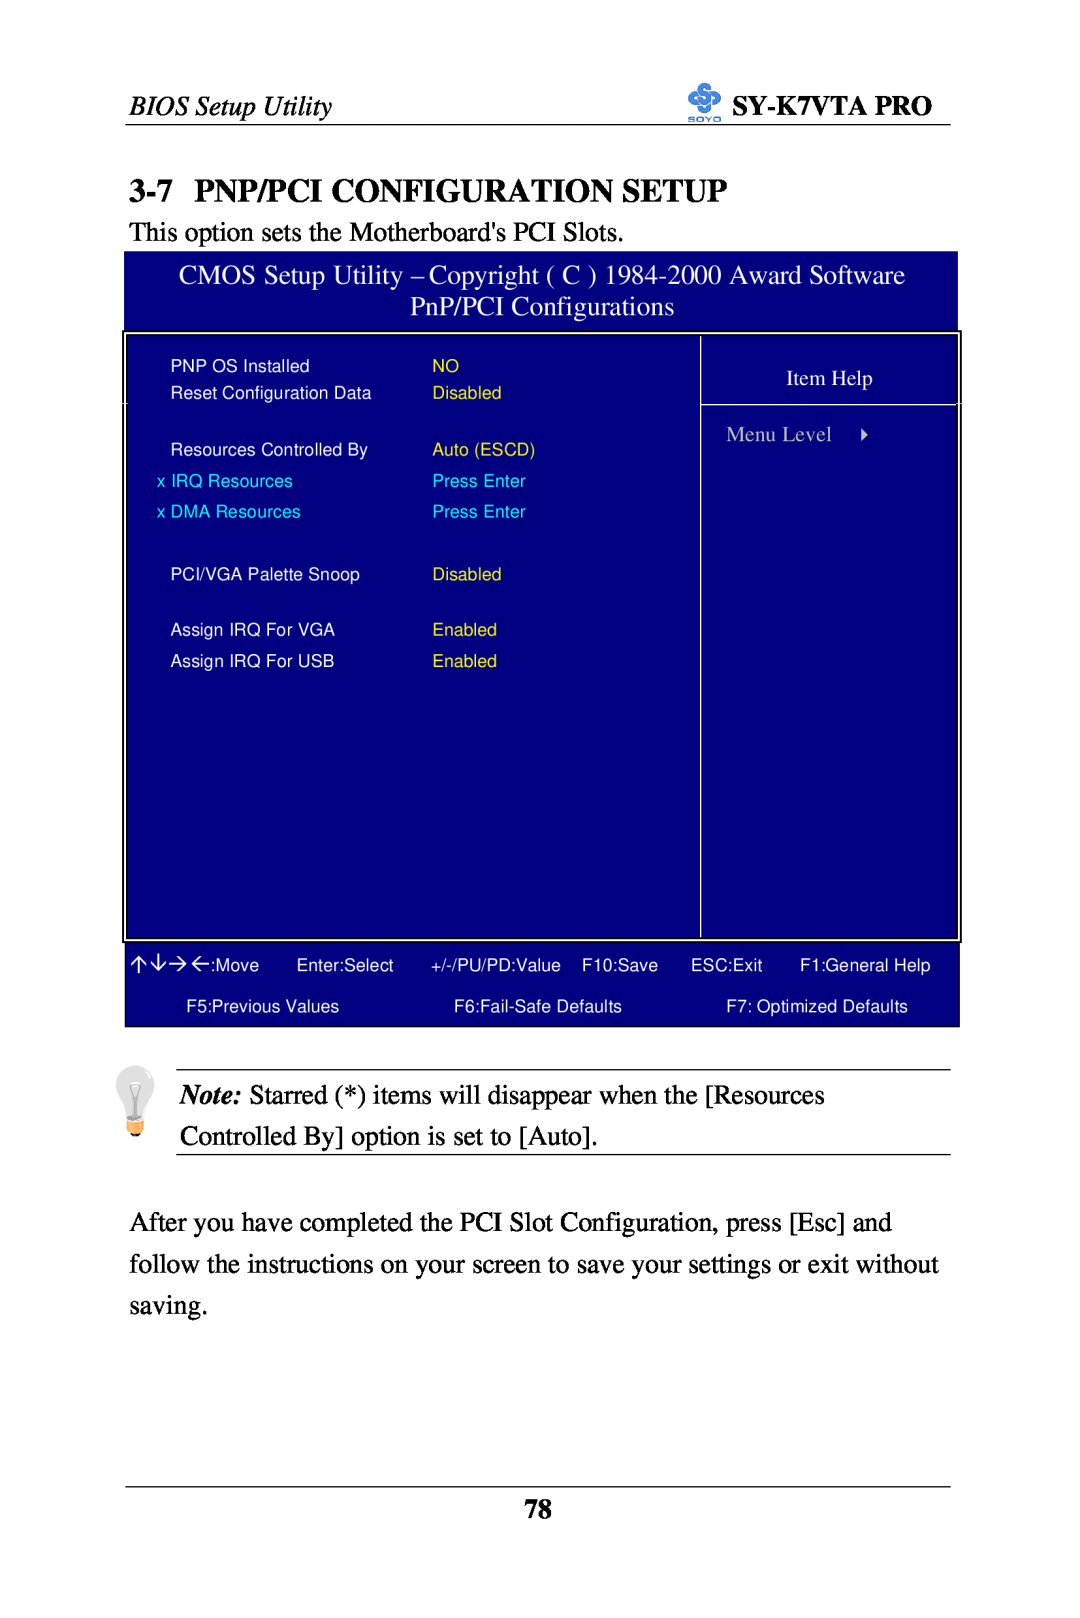 SOYO SY-K7VTA PRO user manual 3-7 PNP/PCI CONFIGURATION SETUP, PnP/PCI Configurations, BIOS Setup Utility 